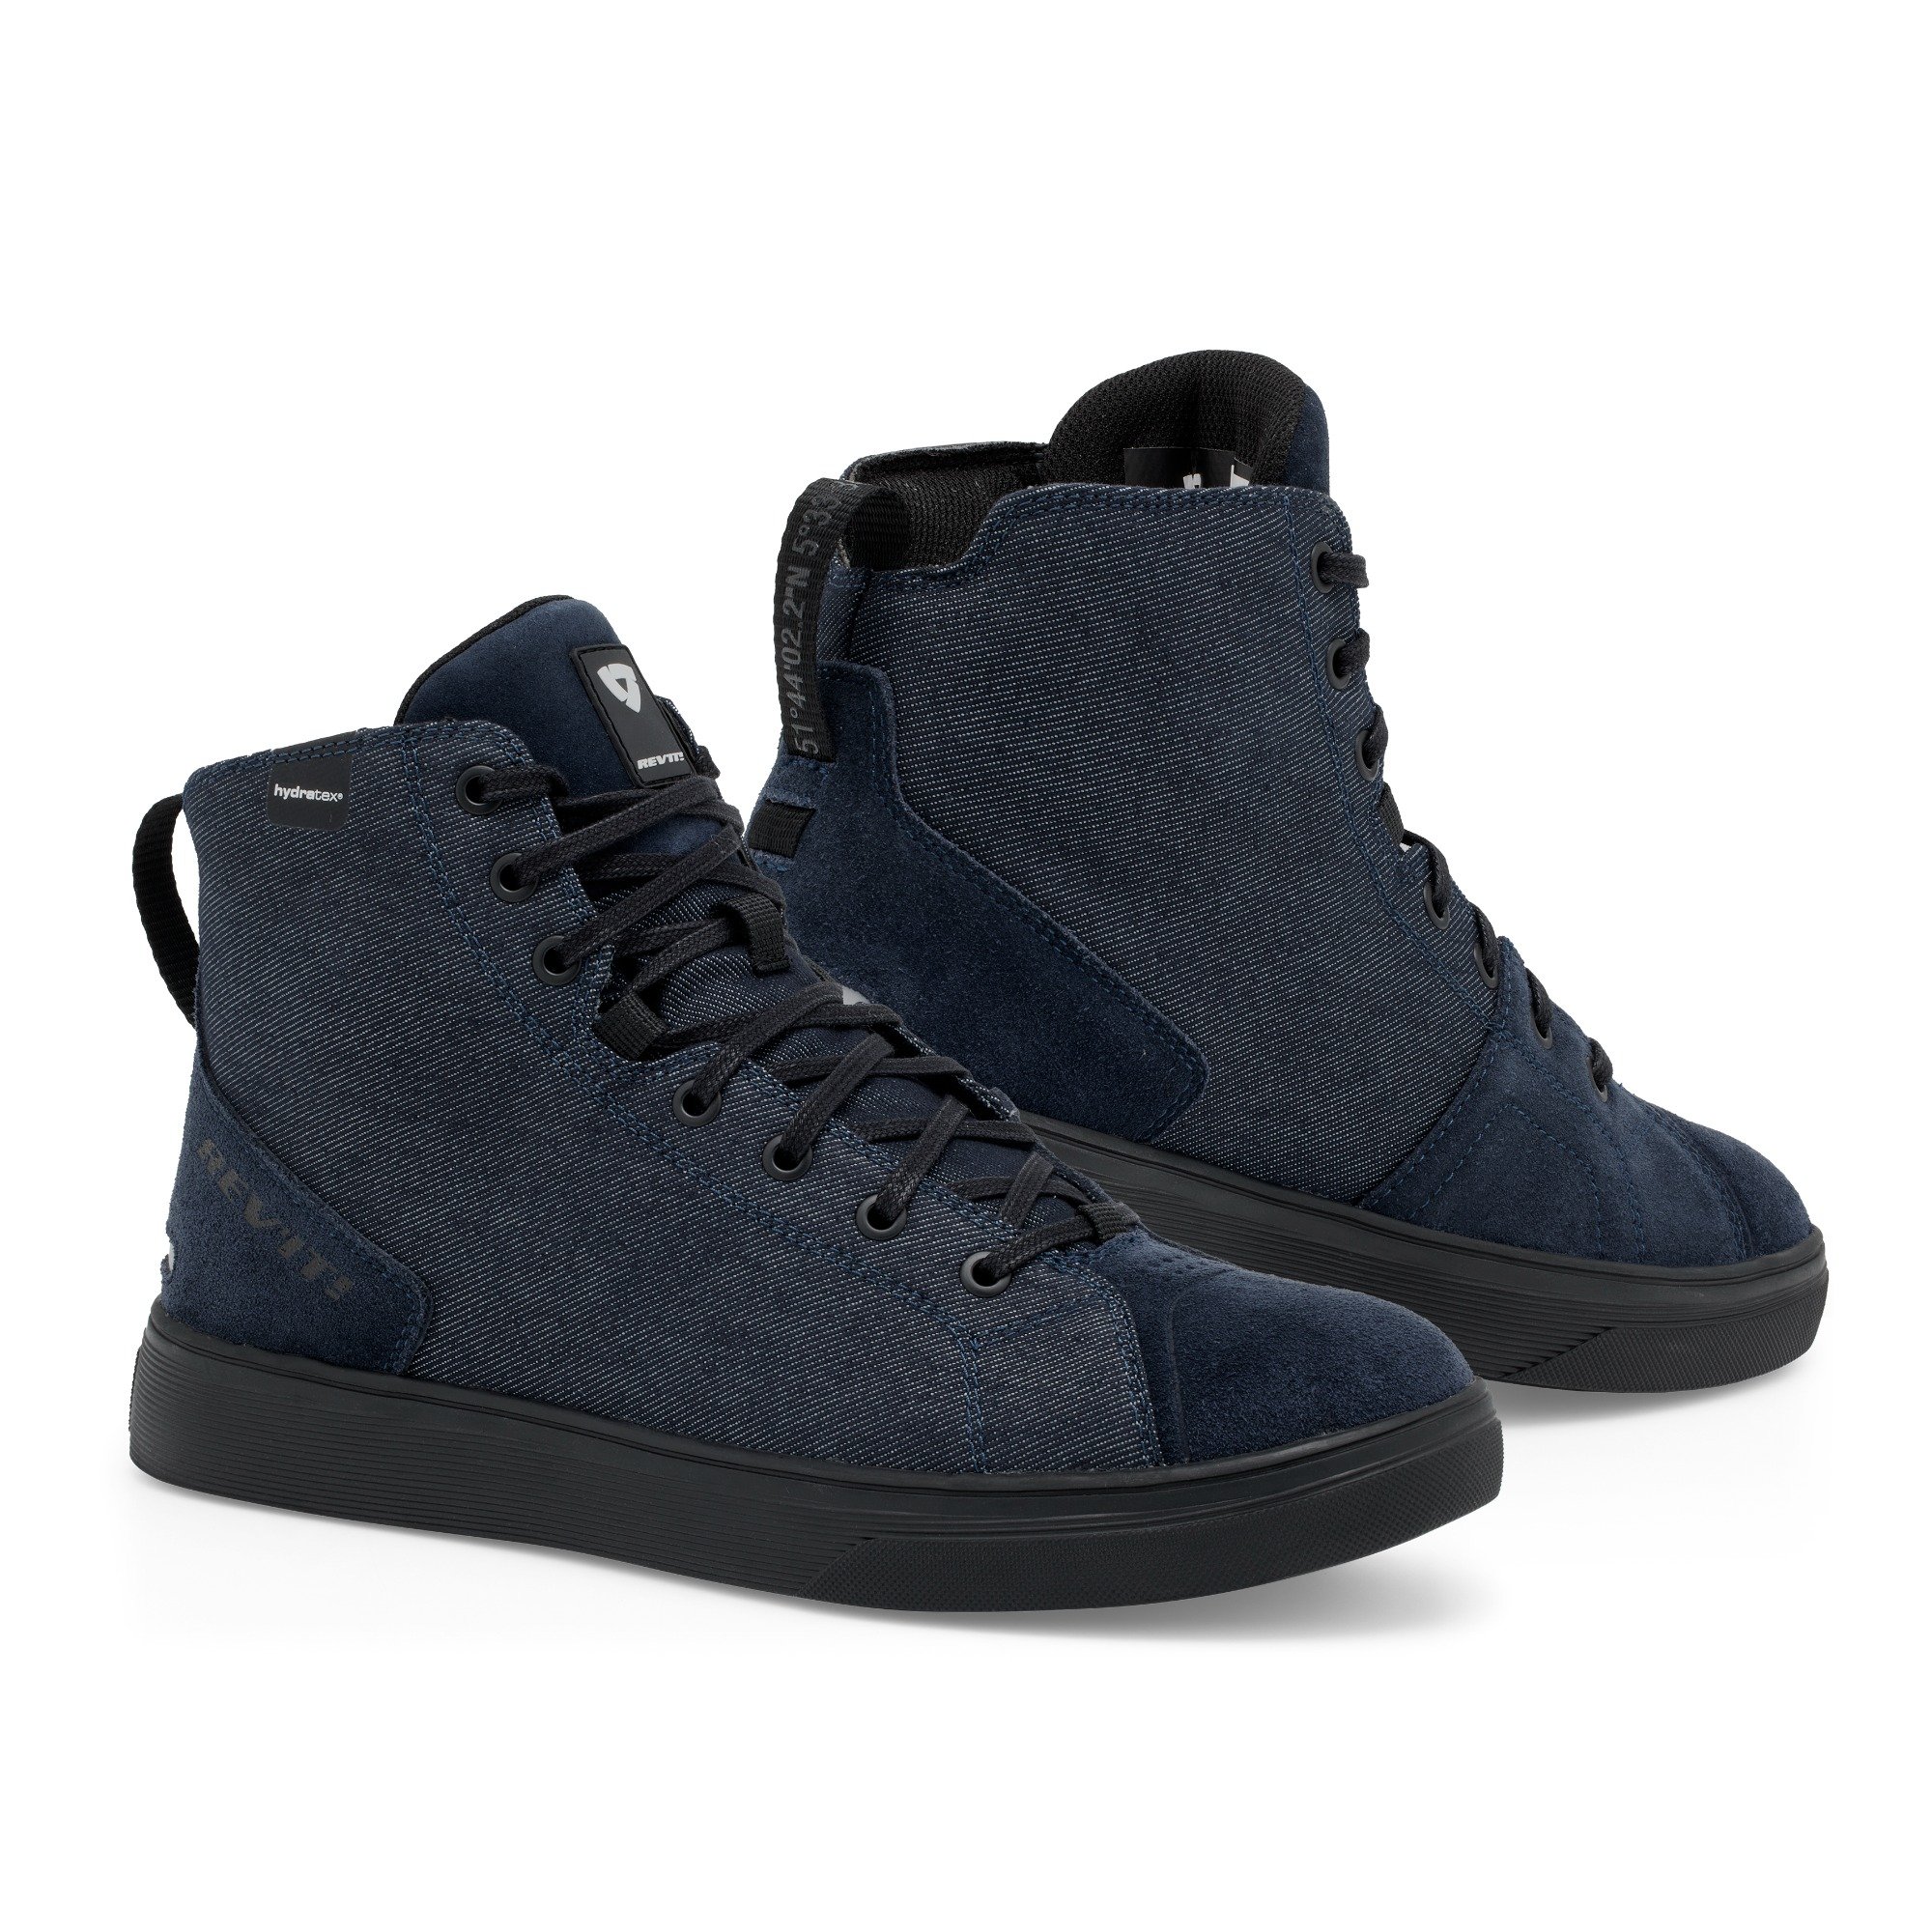 Image of REV'IT! Delta H2O Shoes Dark Blue Black Size 39 ID 8700001356428